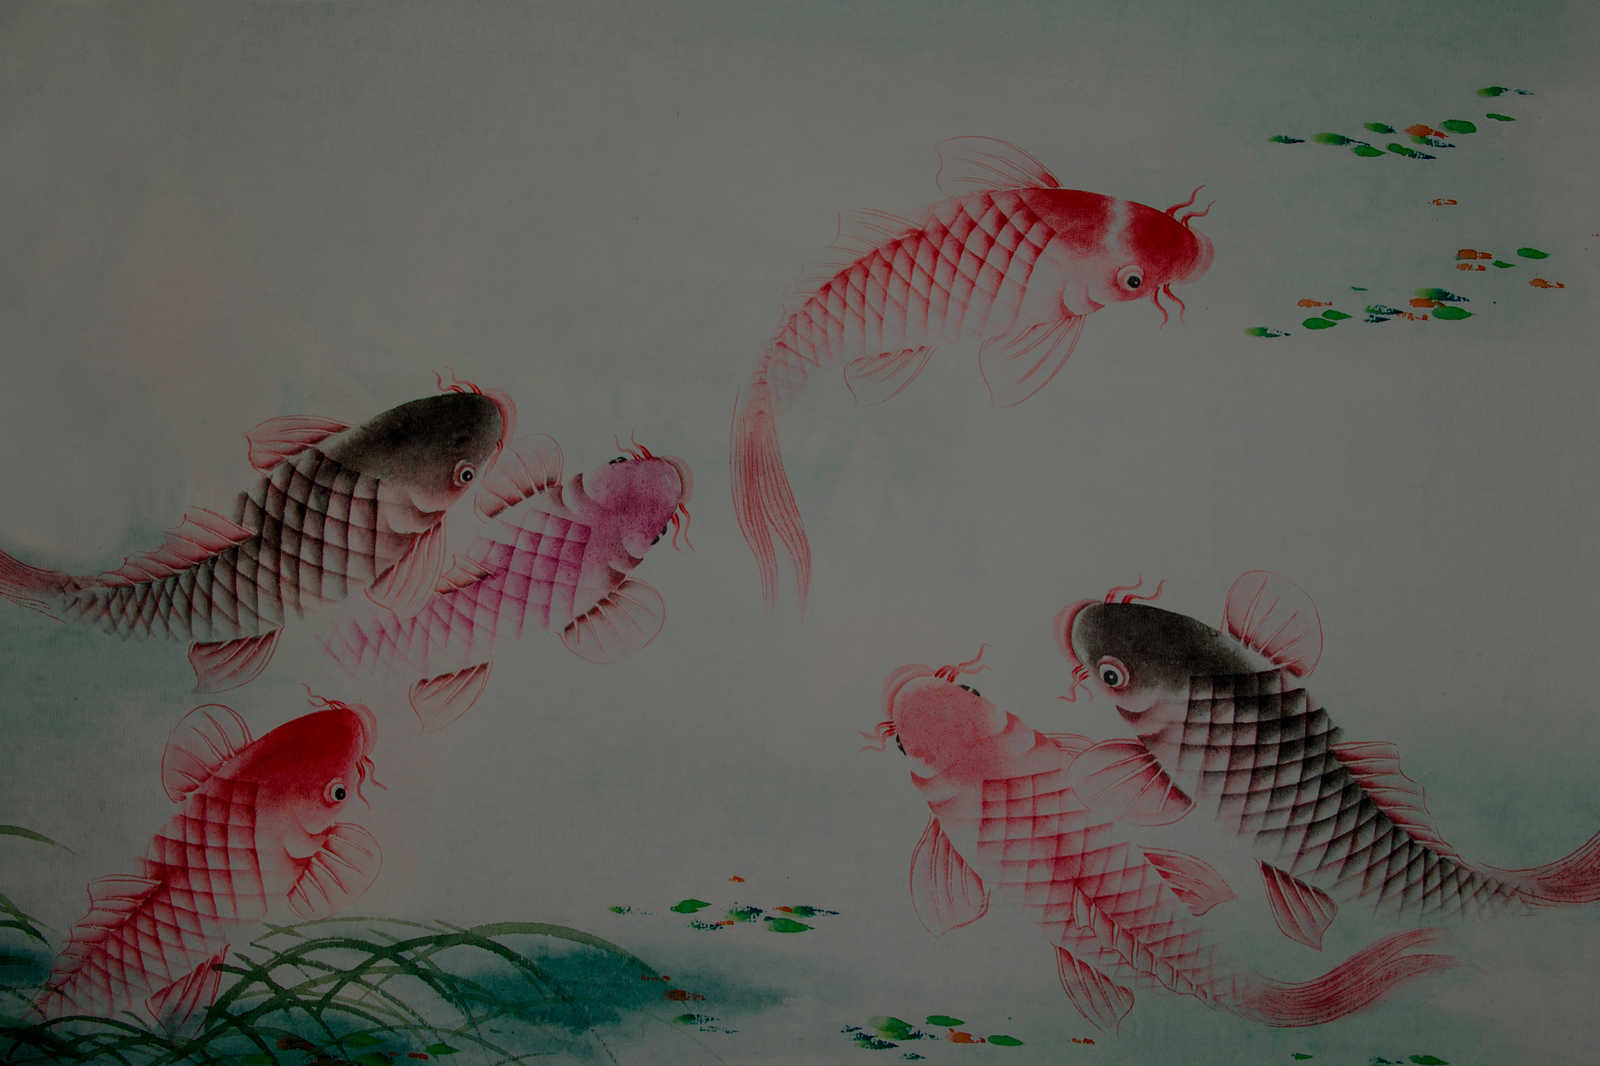             Cuadro en lienzo Estilo Asia con estanque Koi | paredes by patel - 0,90 m x 0,60 m
        